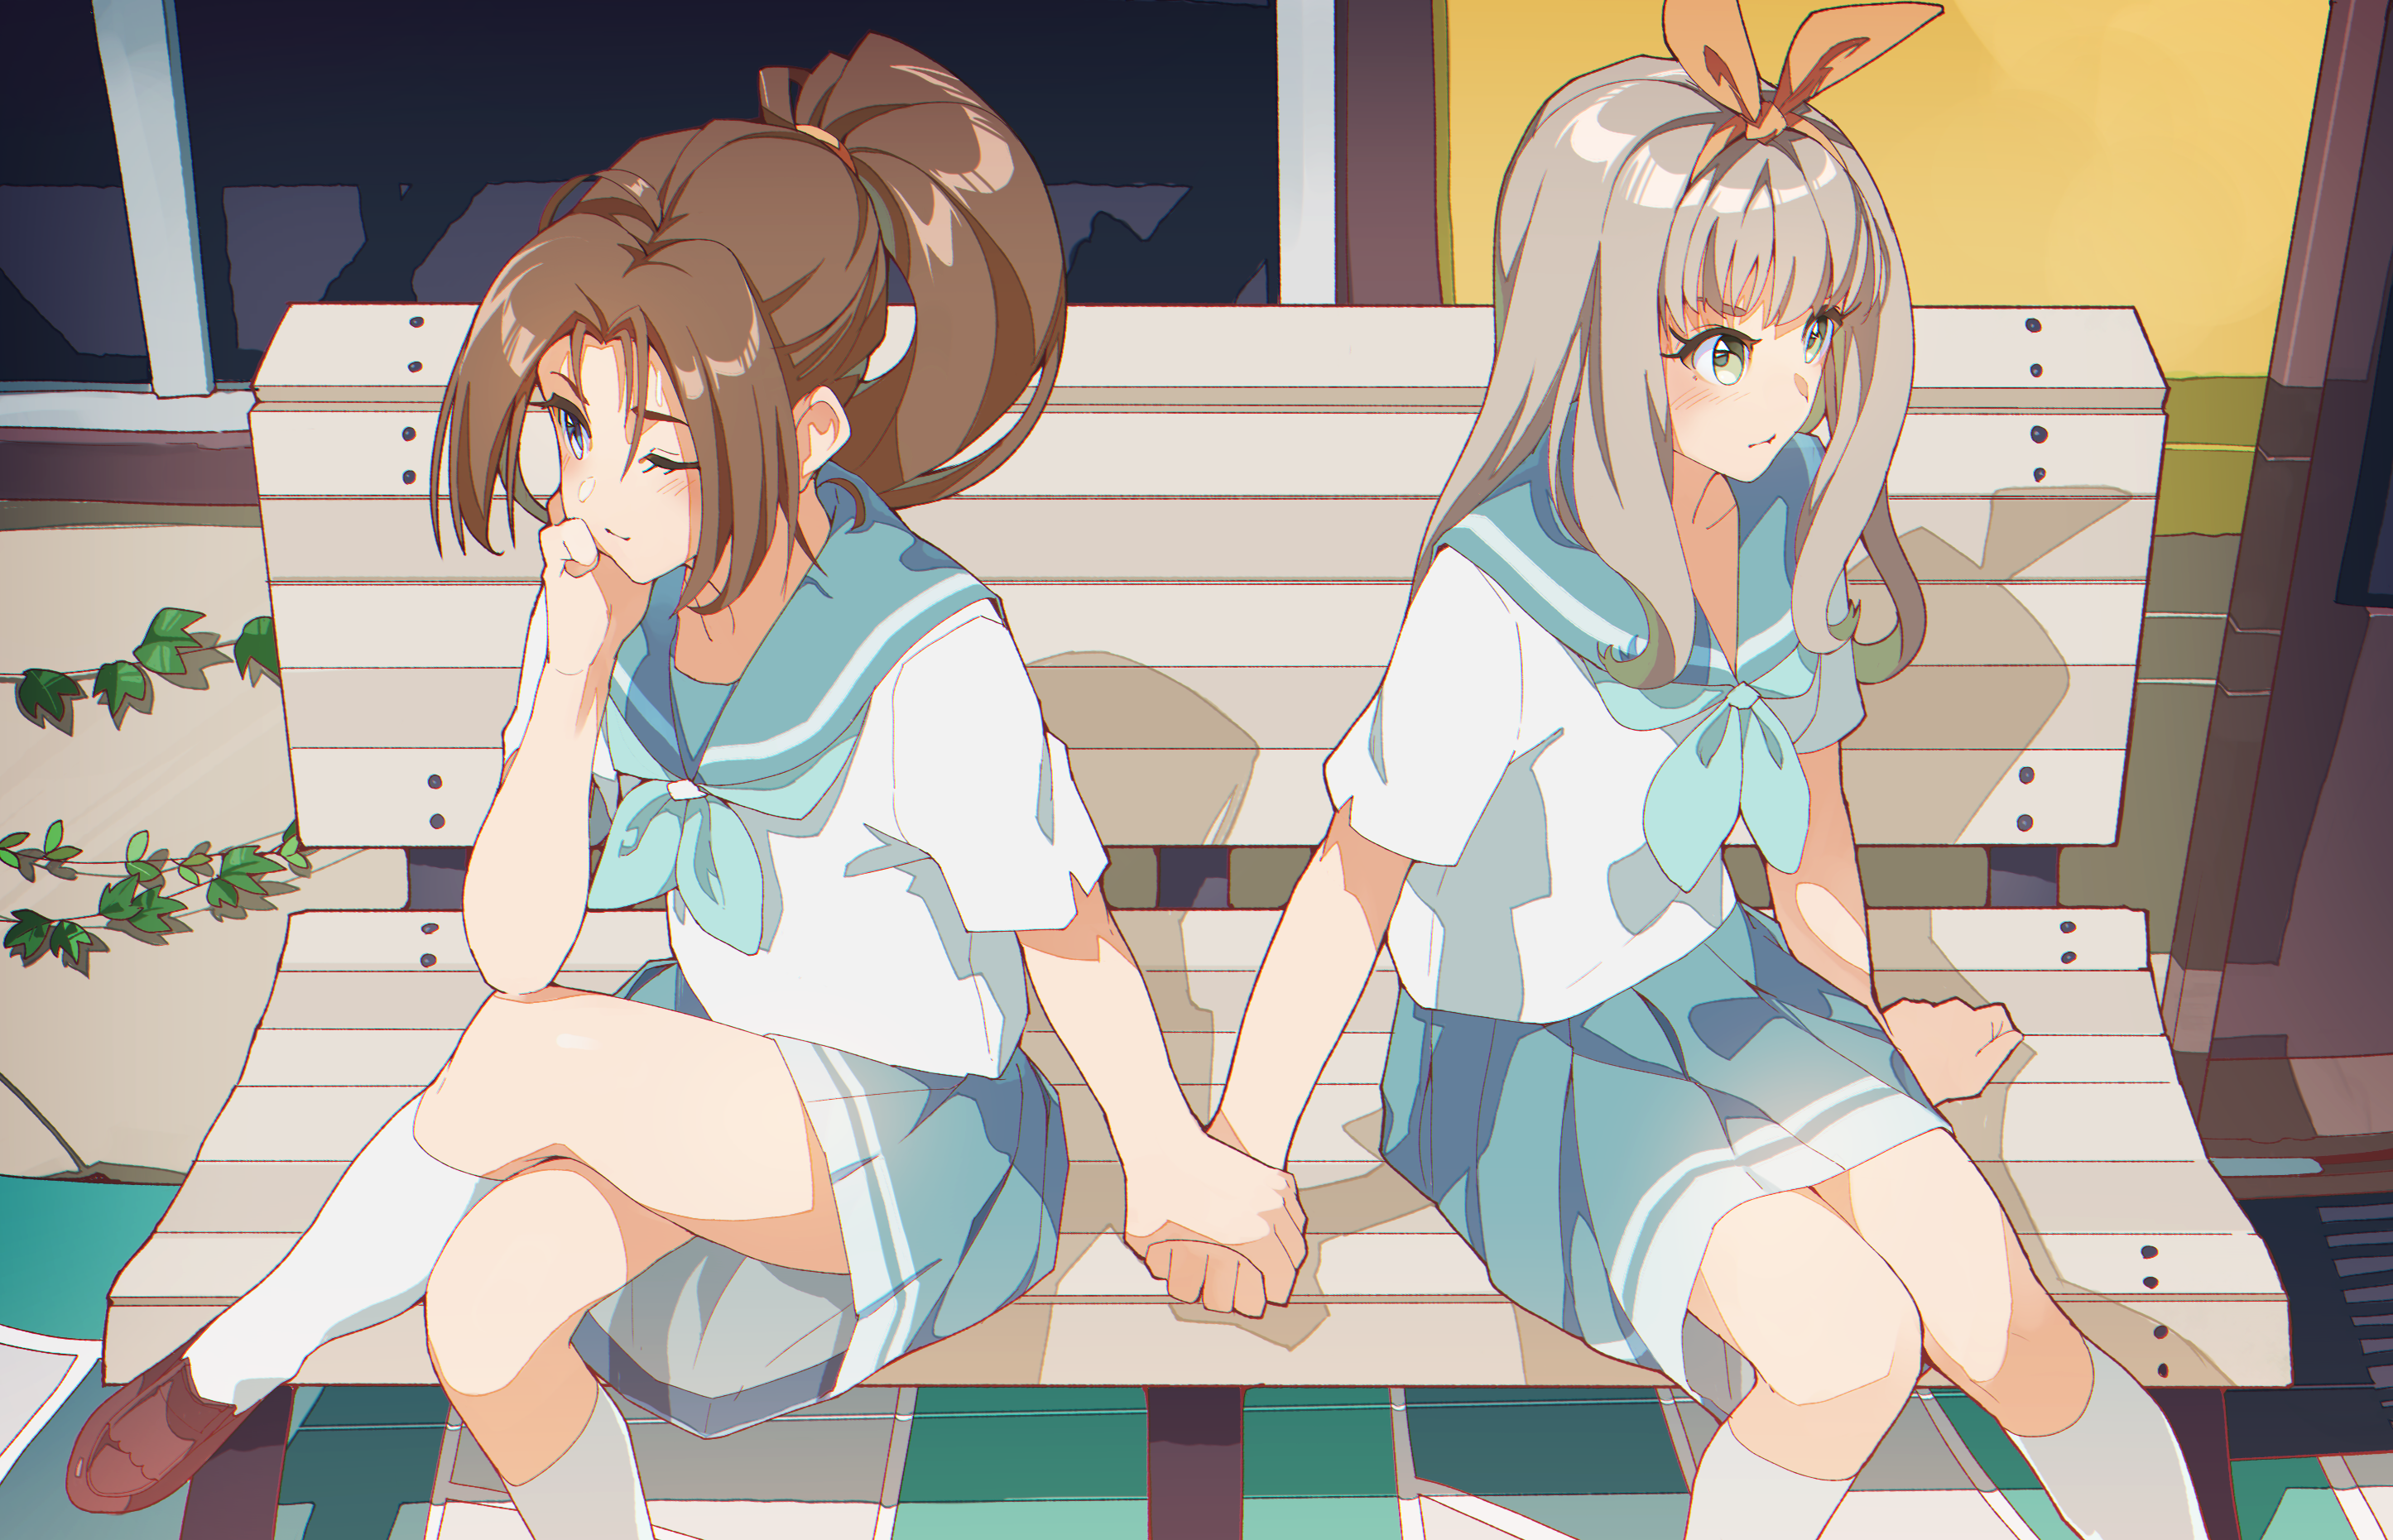 Wallpapers anime Hibike Euphonium anime girl holding hands on the desktop